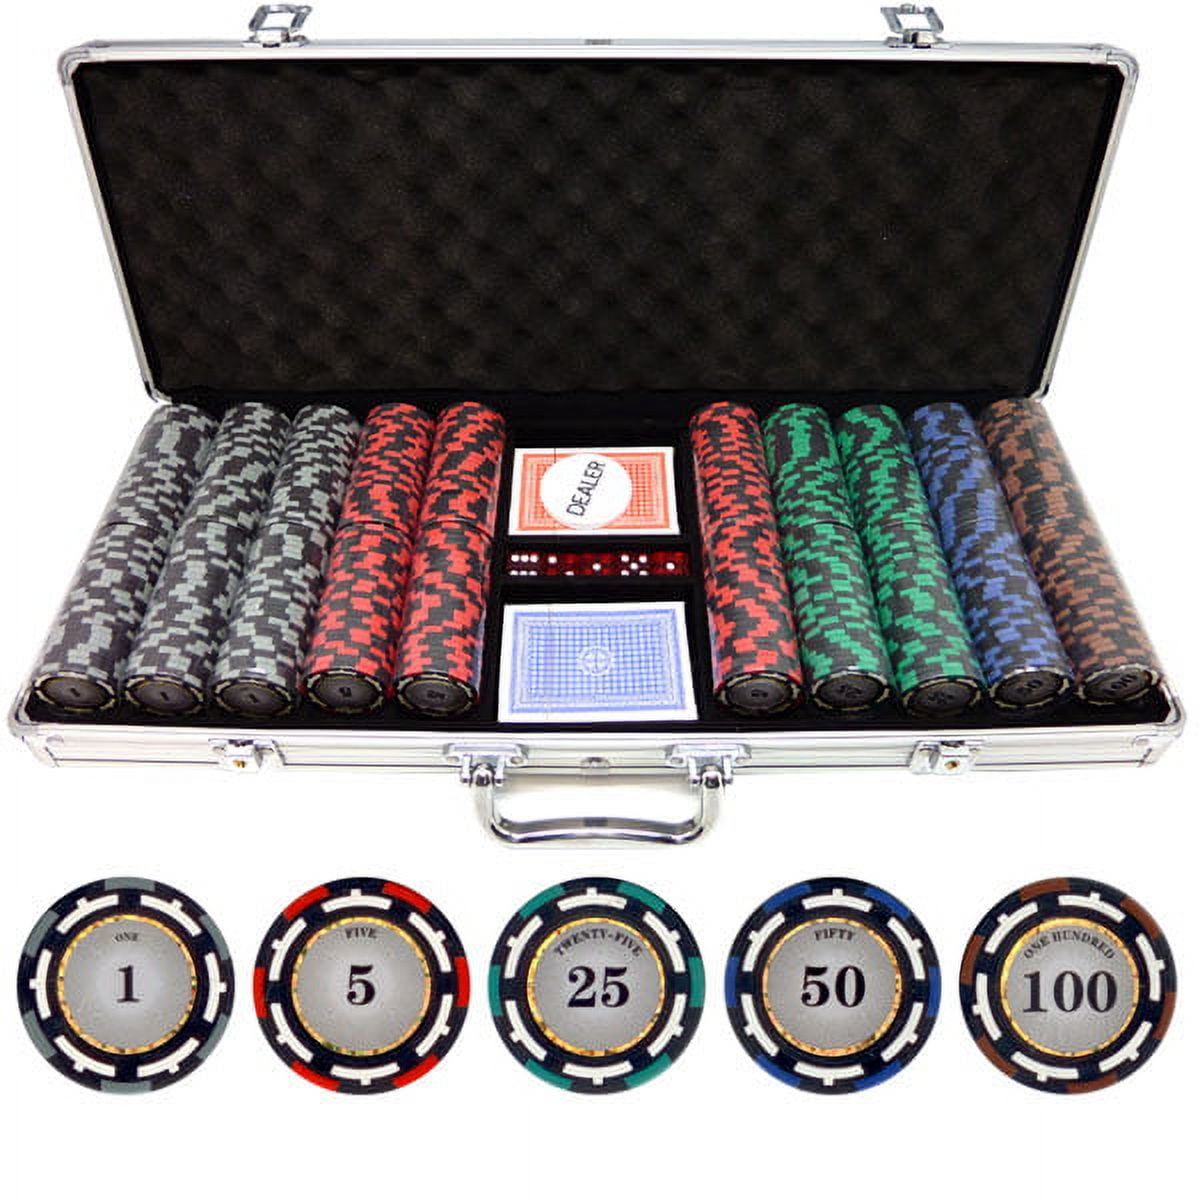 500 Desert Heat Poker Chip Set with Black Aluminum Case